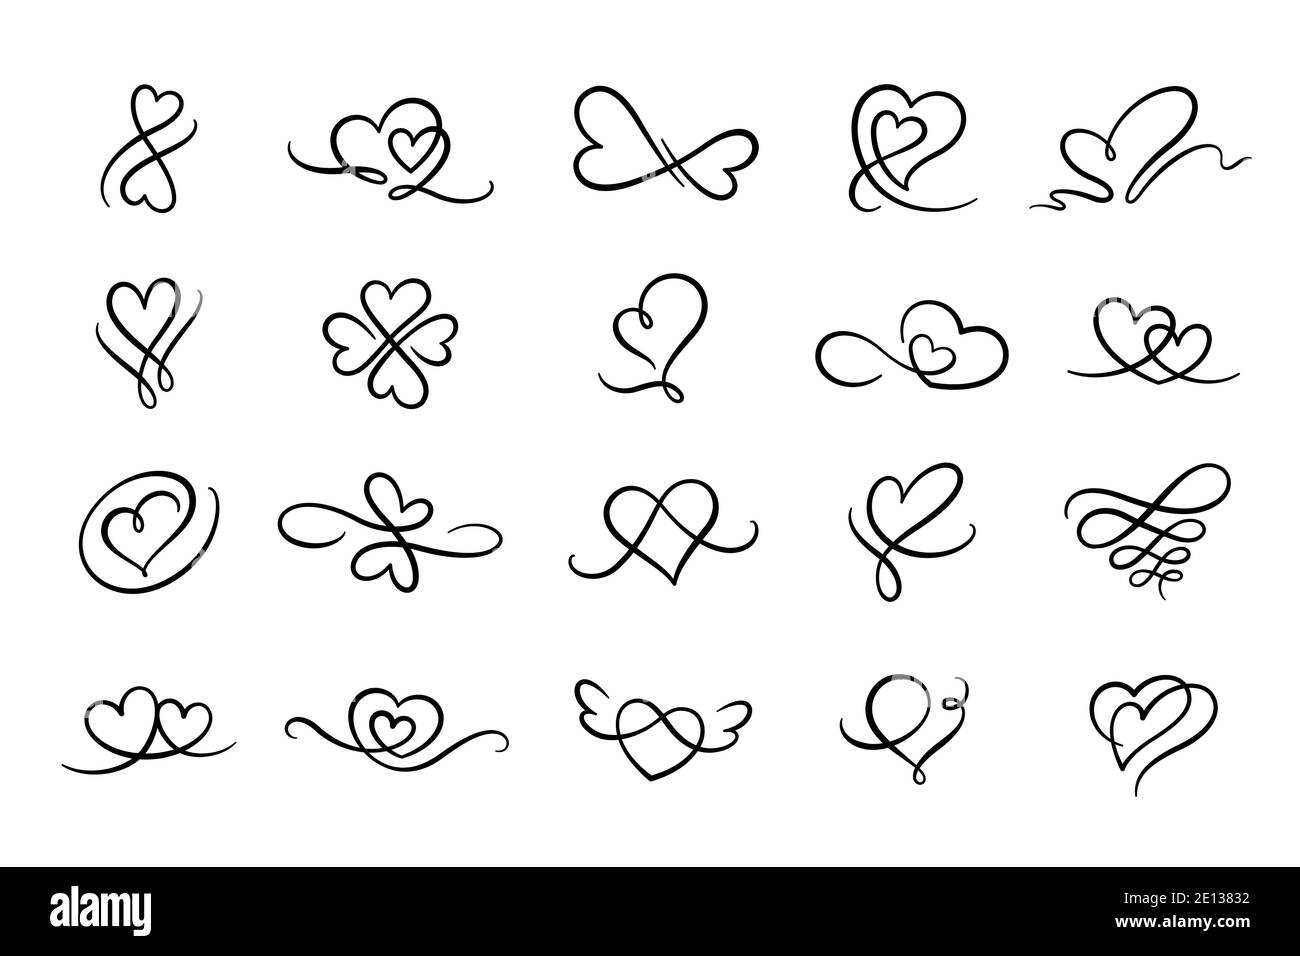 Heart flourish calligraphy sign. Love element decorative hand drawn flourishes,ornate,tattoo. Stock Vector